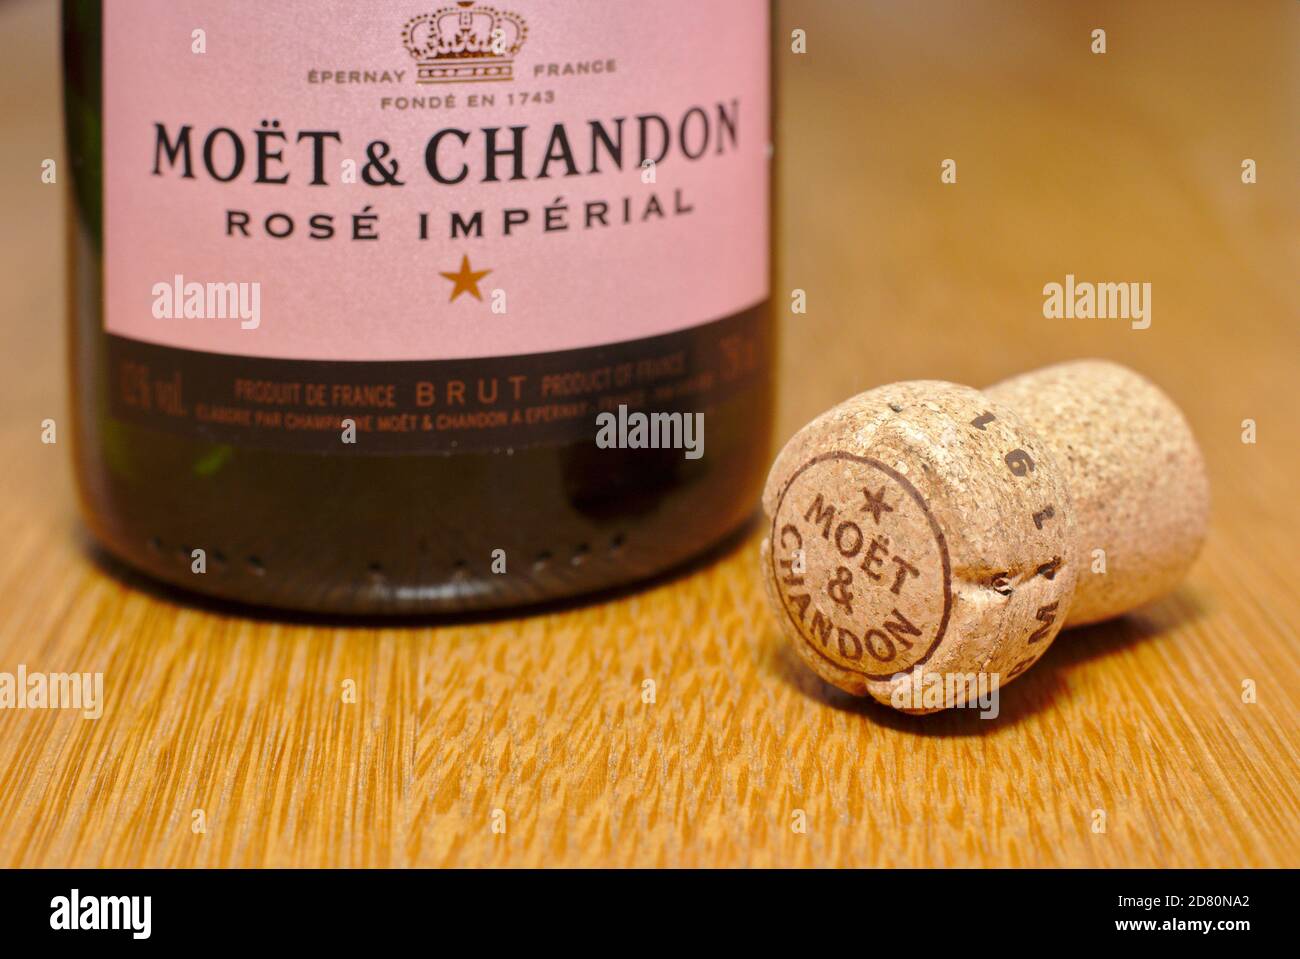 Moet & Chandon champagne. Stock Photo